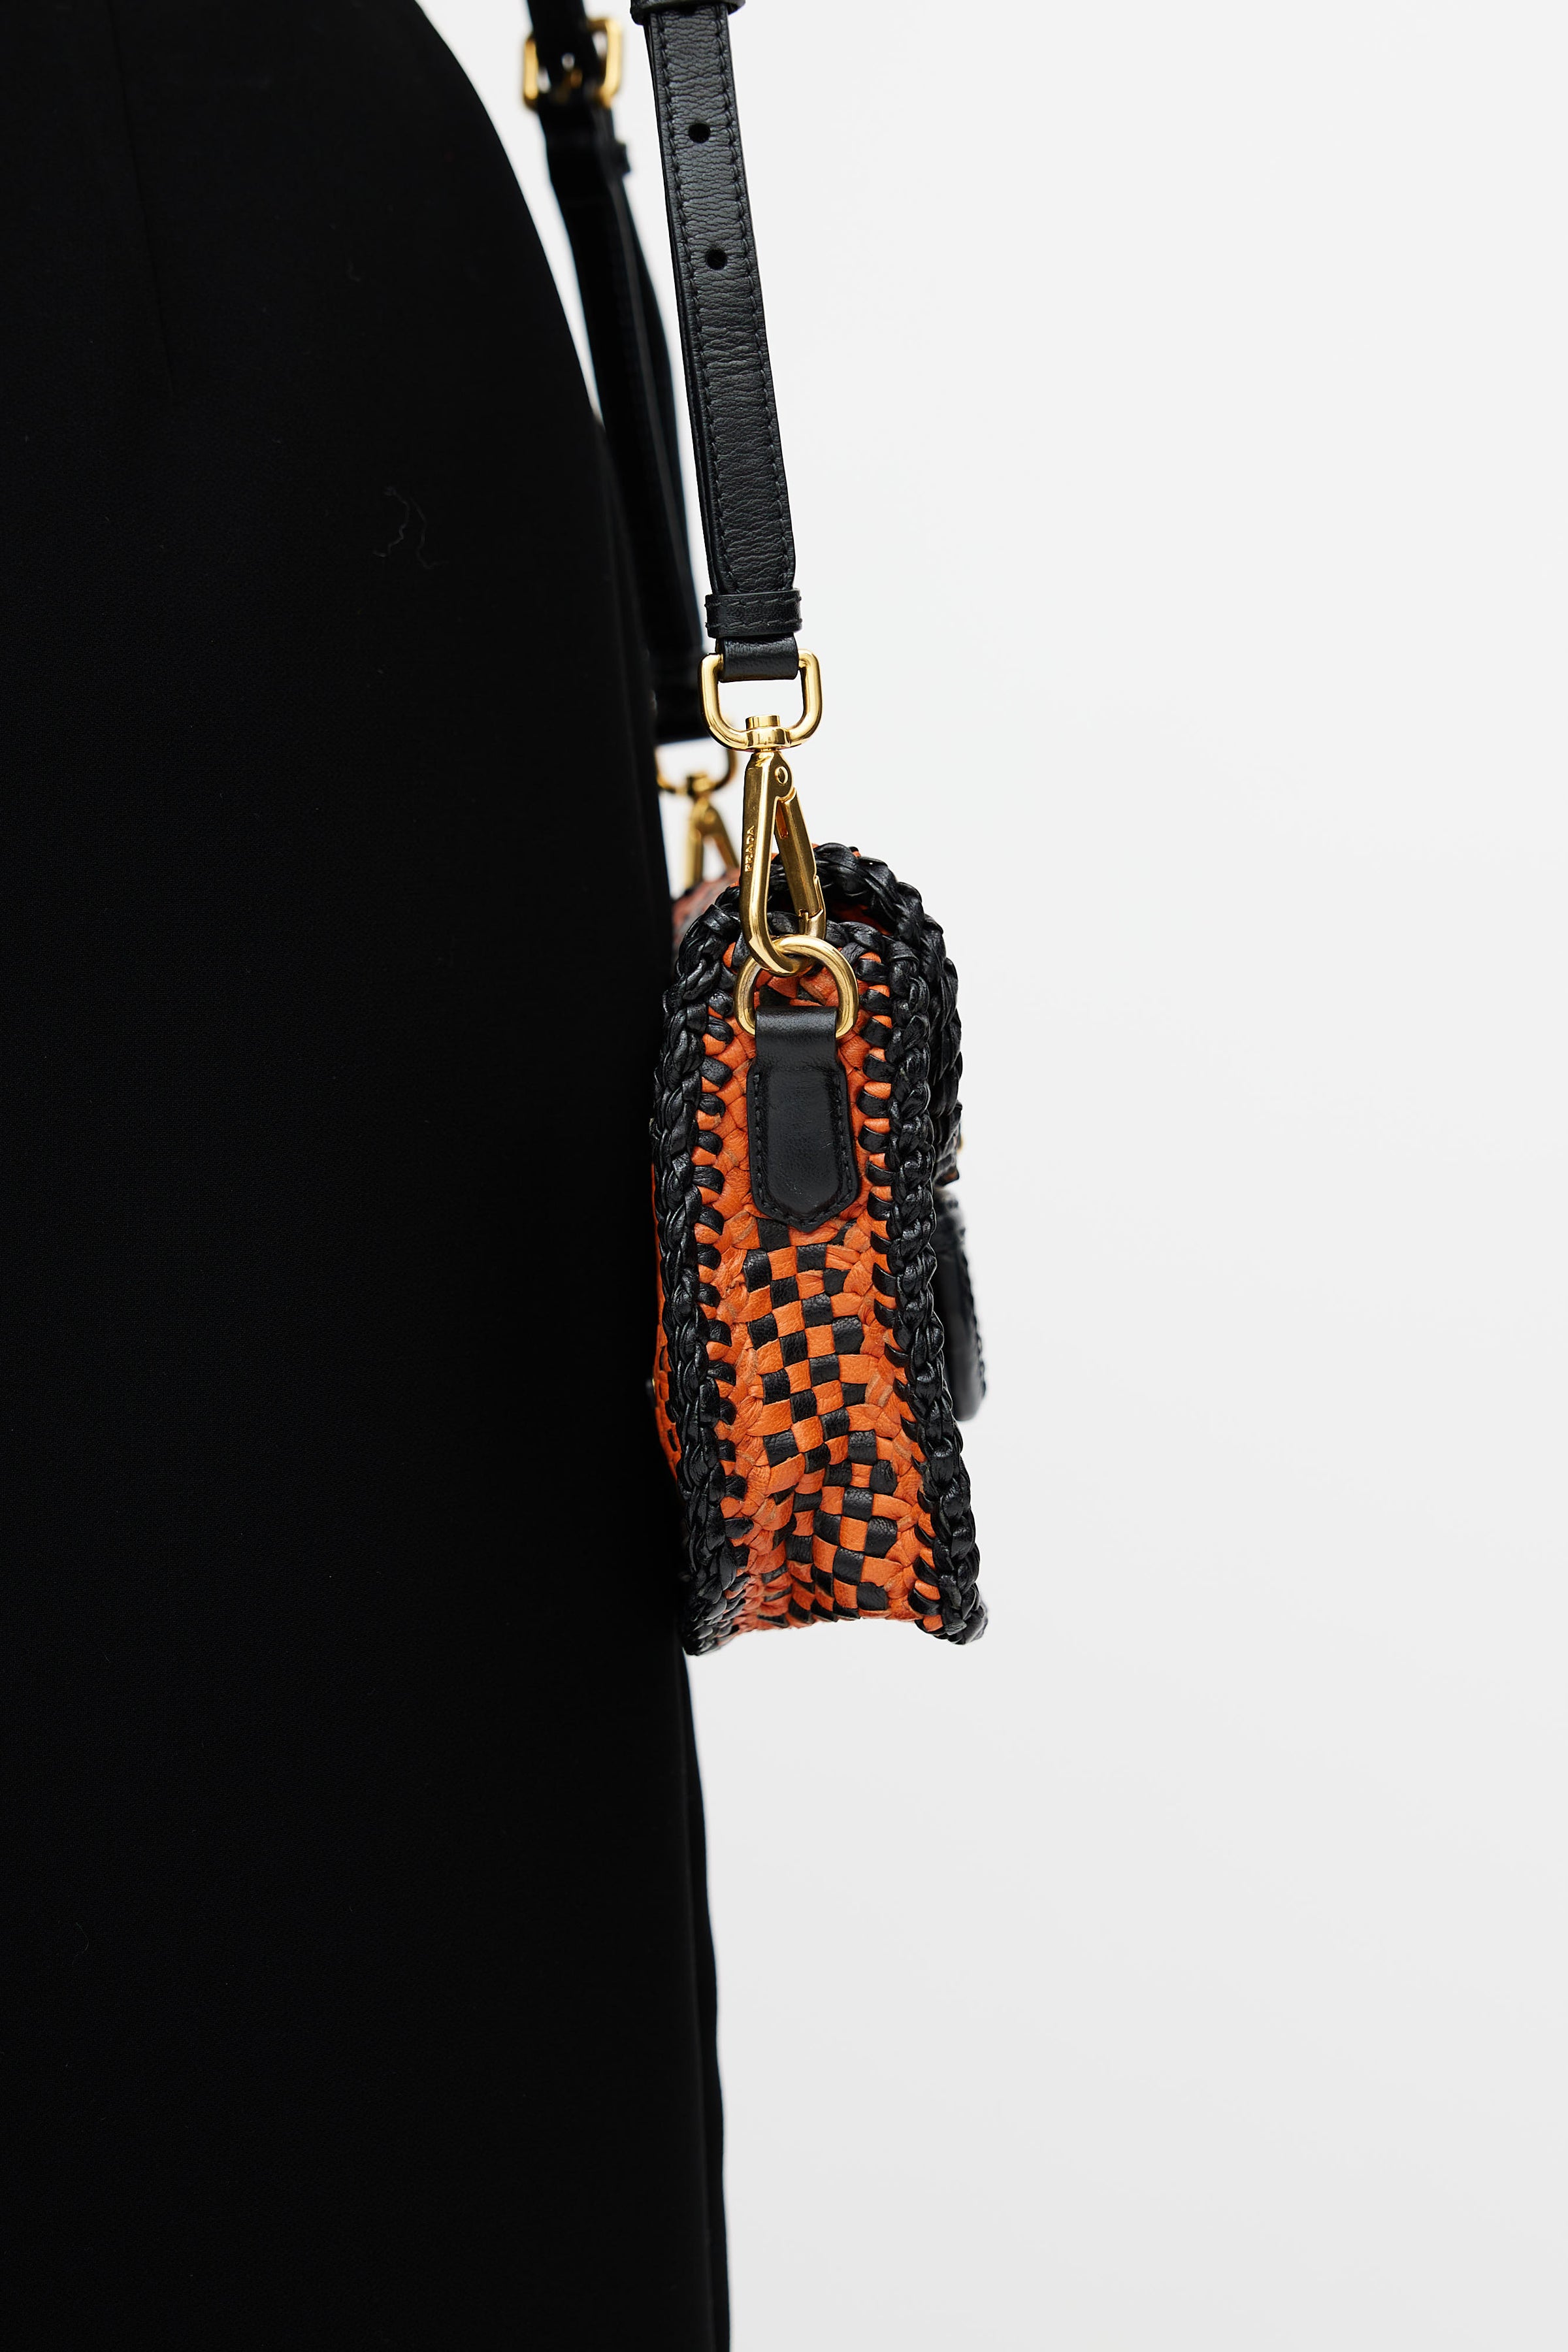 Prada Madras Woven Zip Clutch - Orange Clutches, Handbags - PRA866983